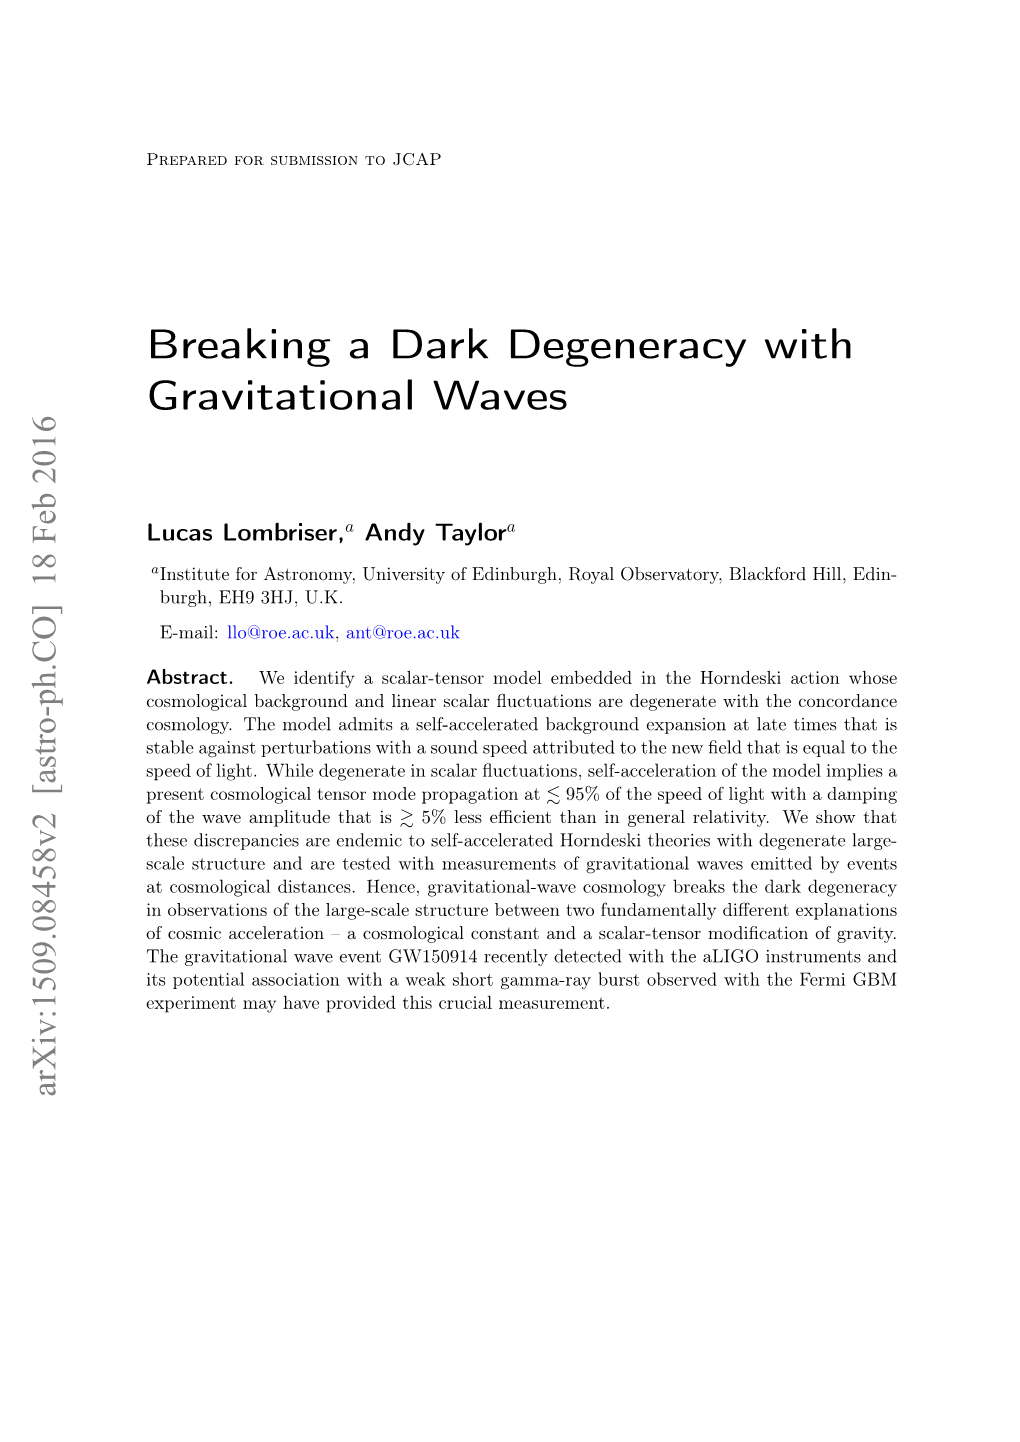 Breaking a Dark Degeneracy with Gravitational Waves